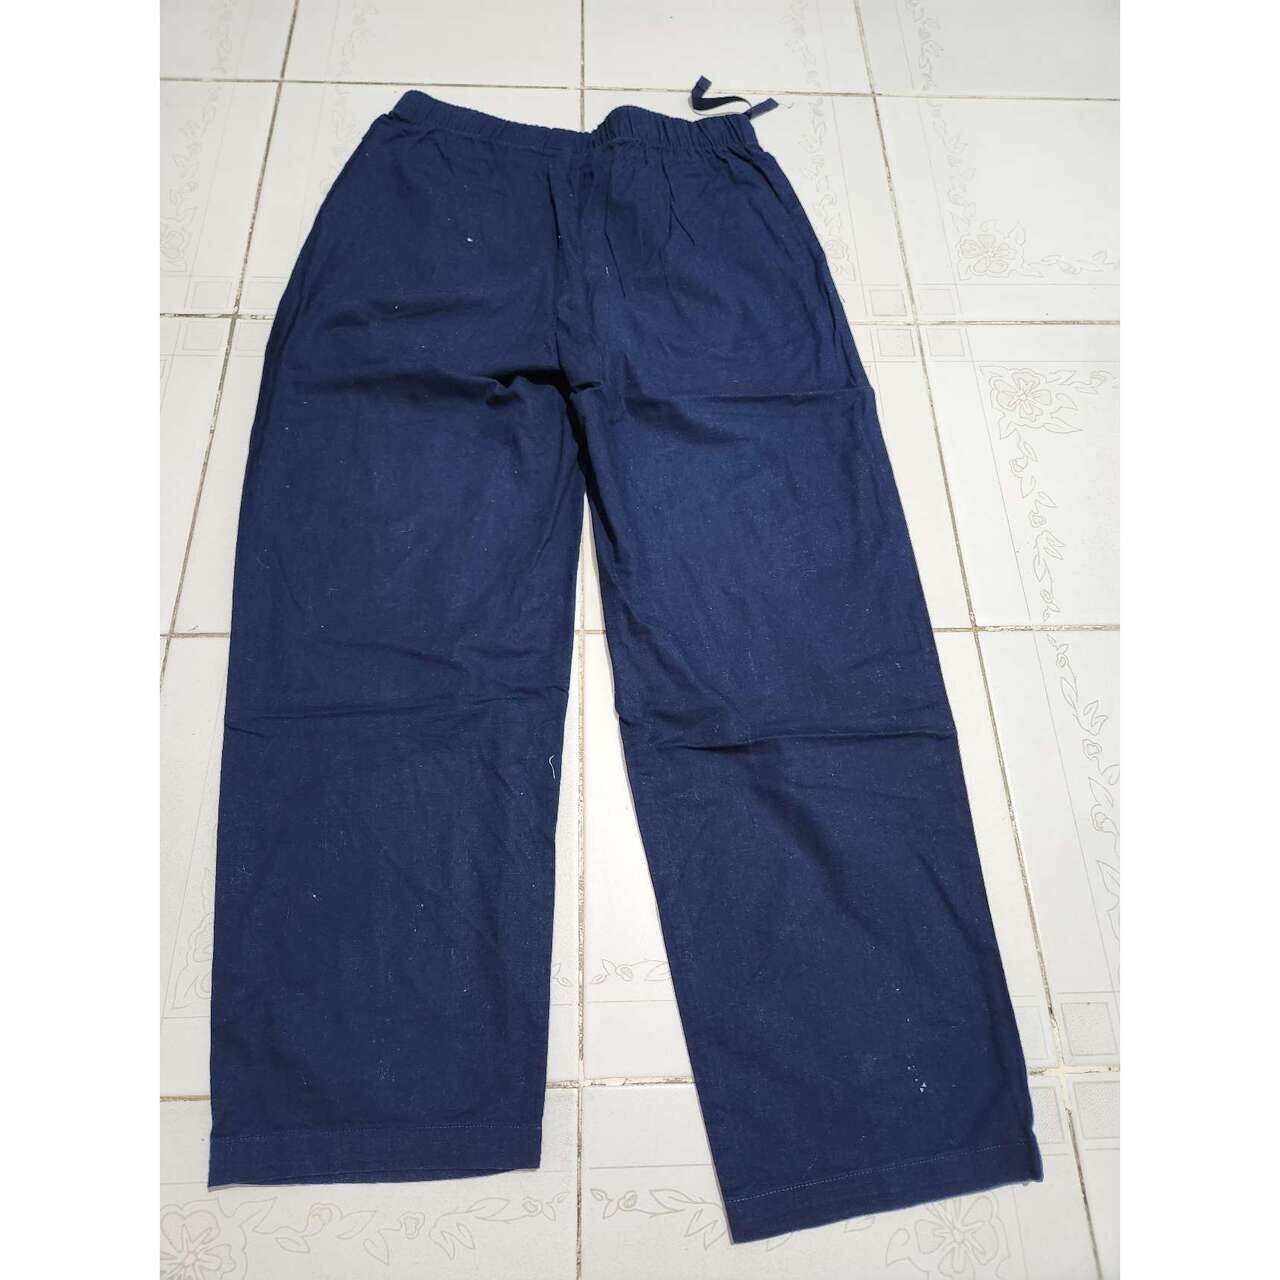 UNIQLO Navy Long Pants